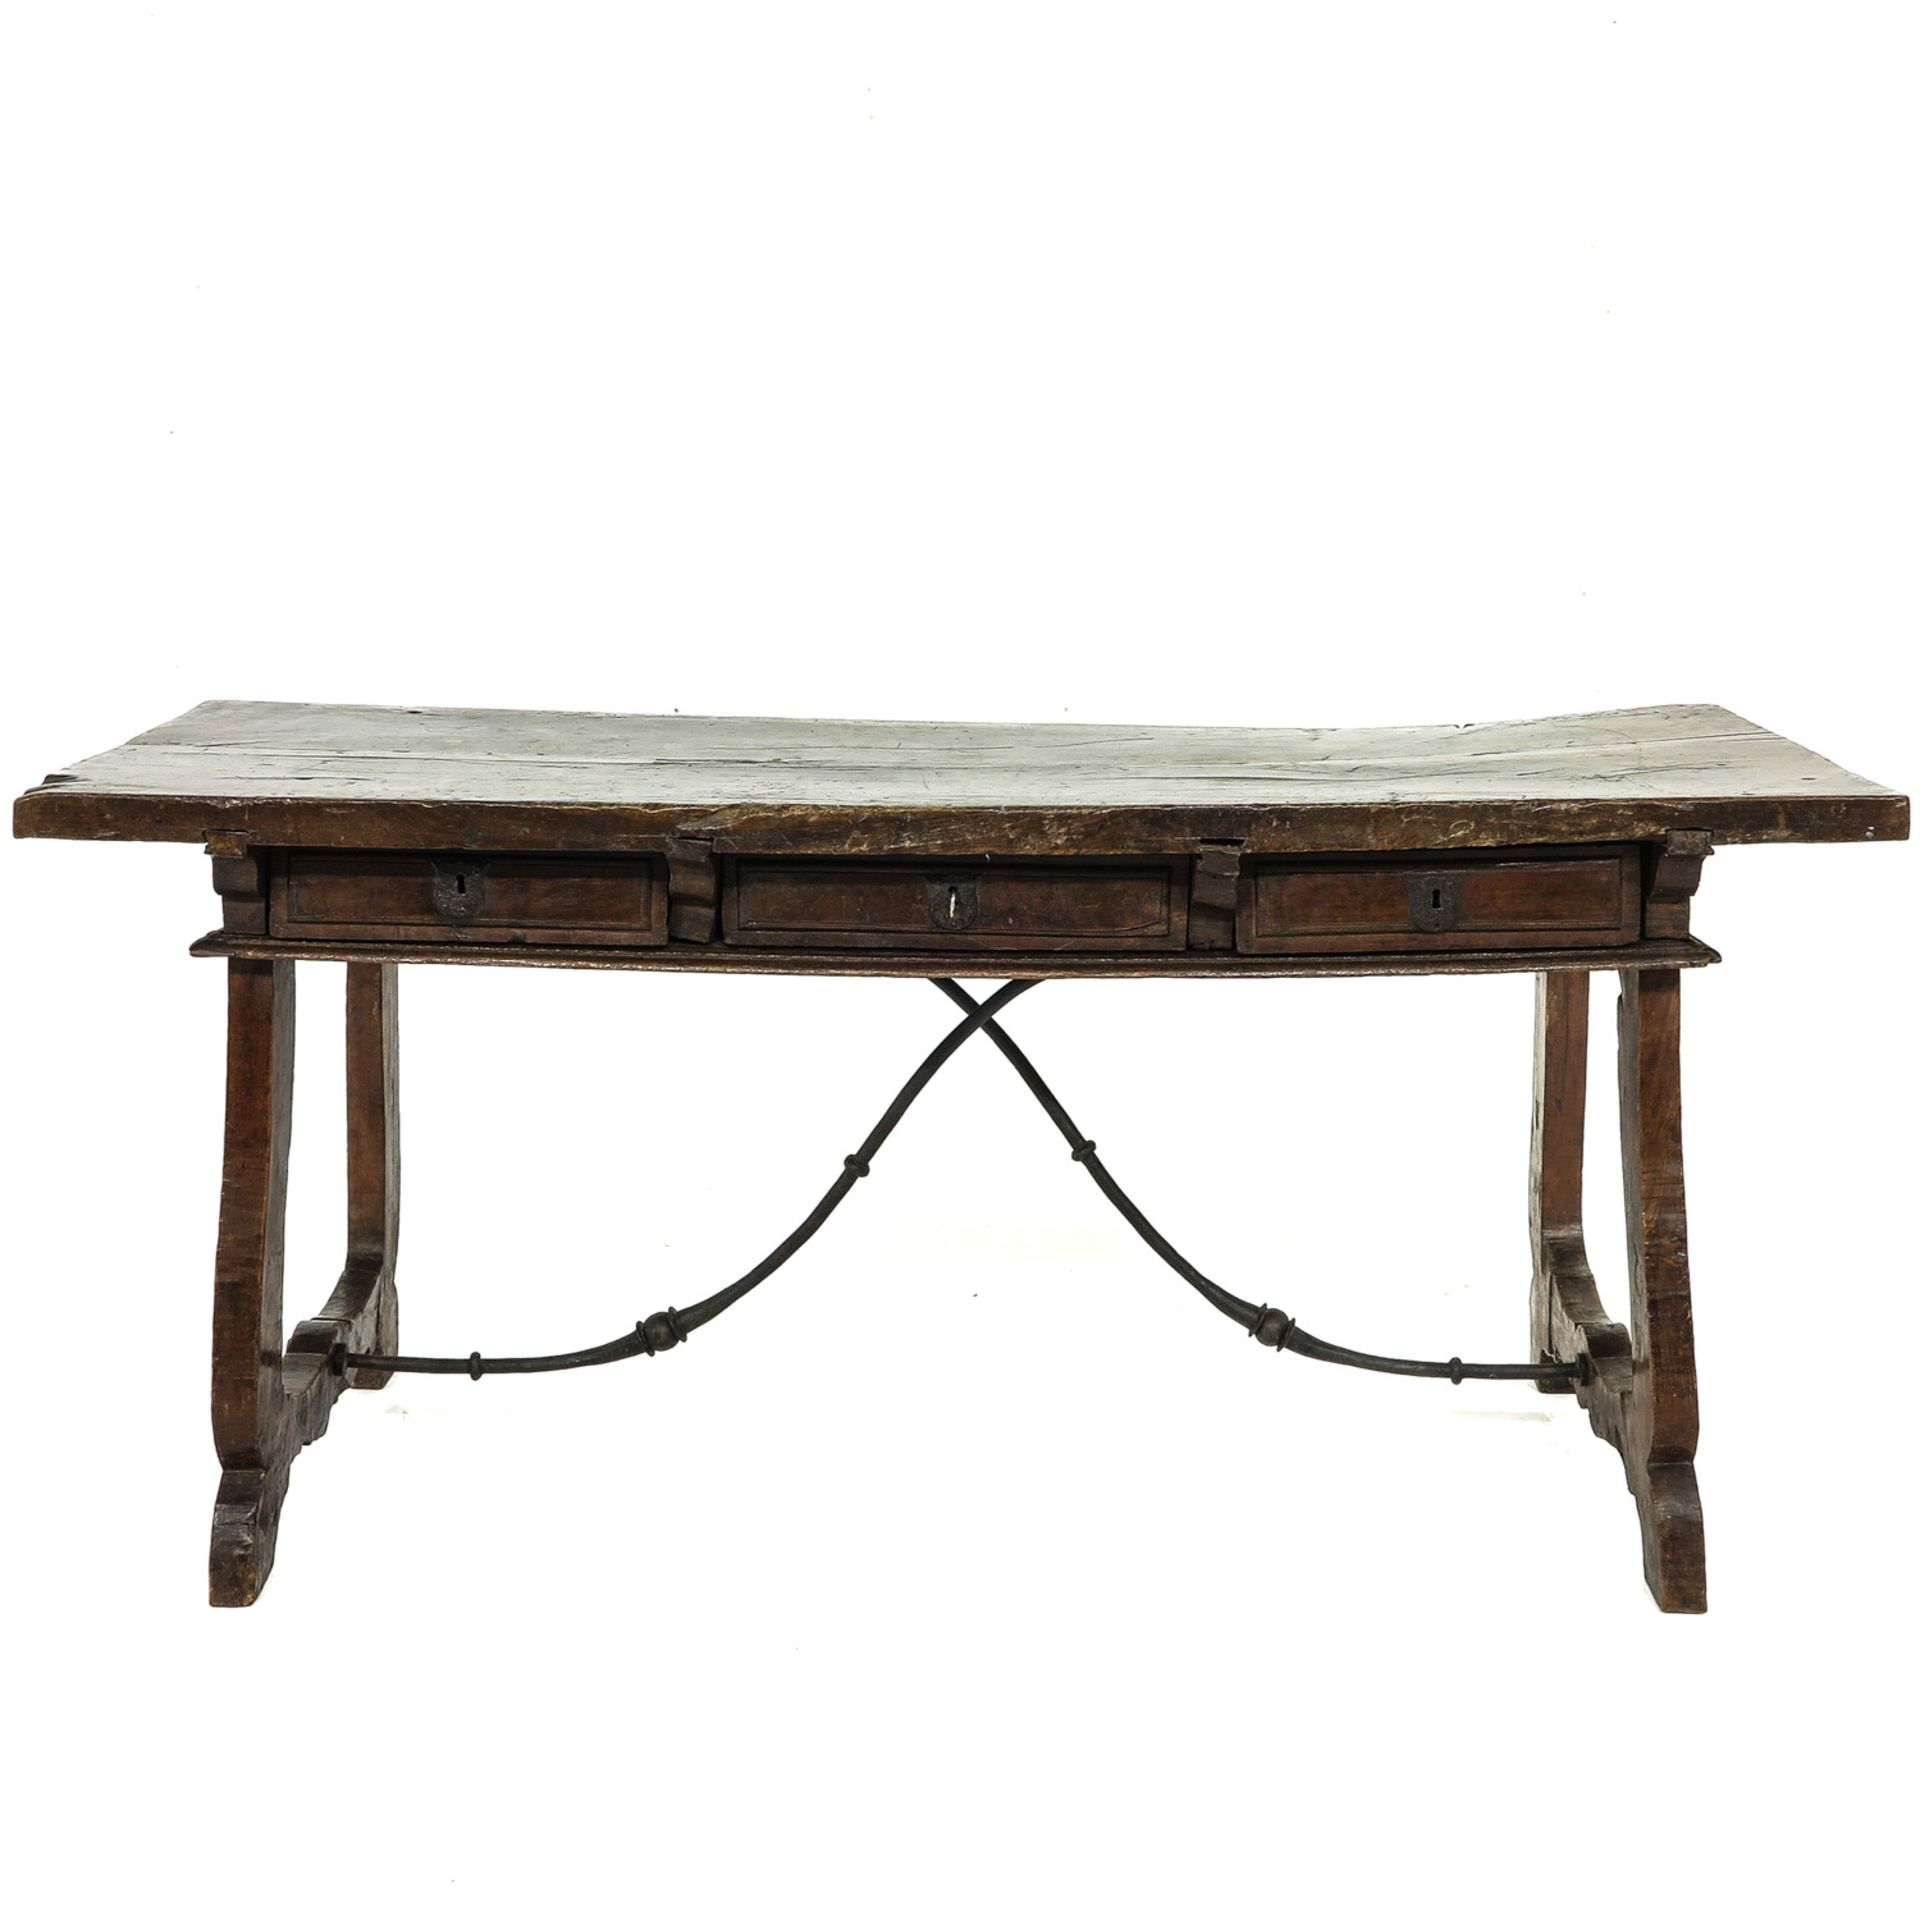 A Walnut Spanish Table Circa 1700